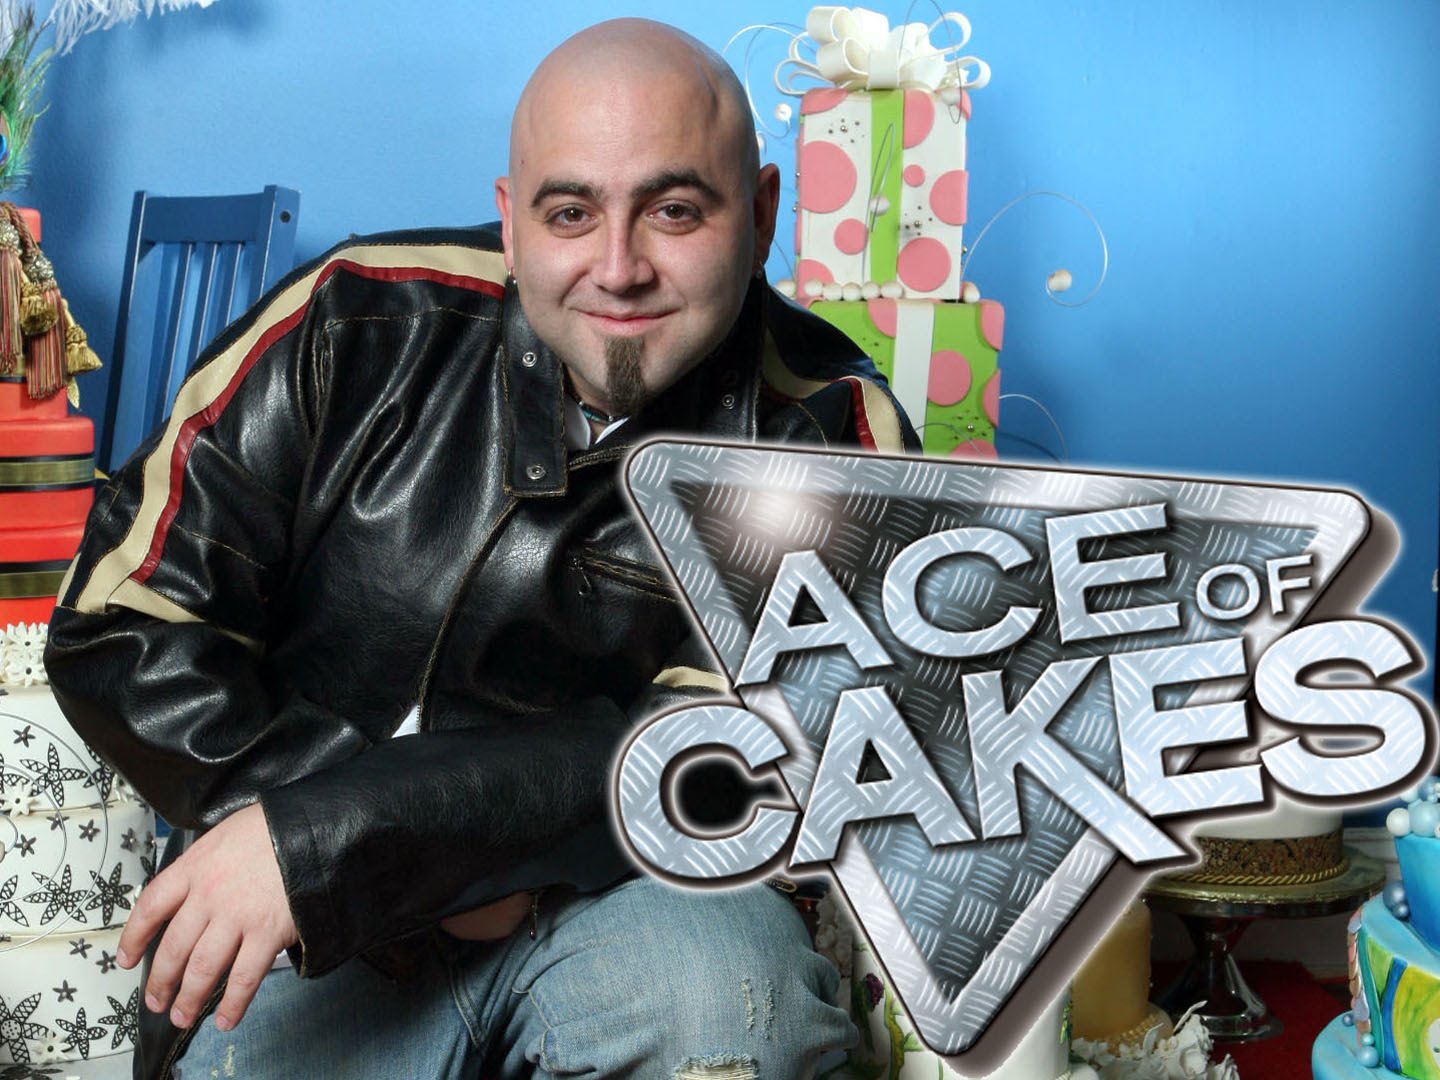 Ace Of Cakes: Season 3